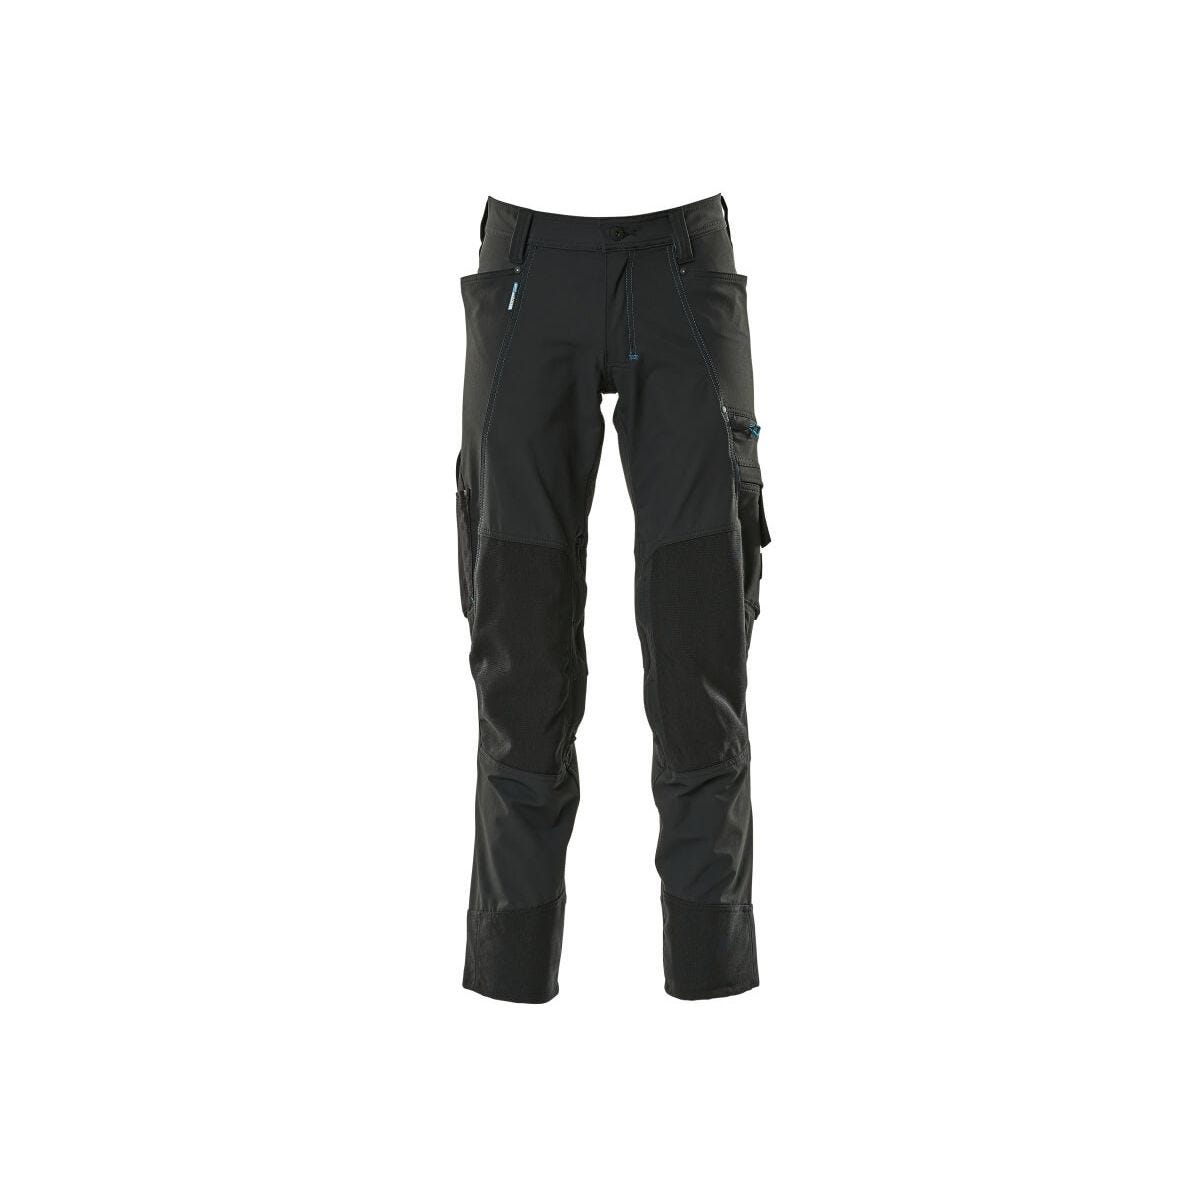 Pantalon avec poches genouillères ULTIMATE STRETCH Noir - Mascot - Taille W38.5/L32 0